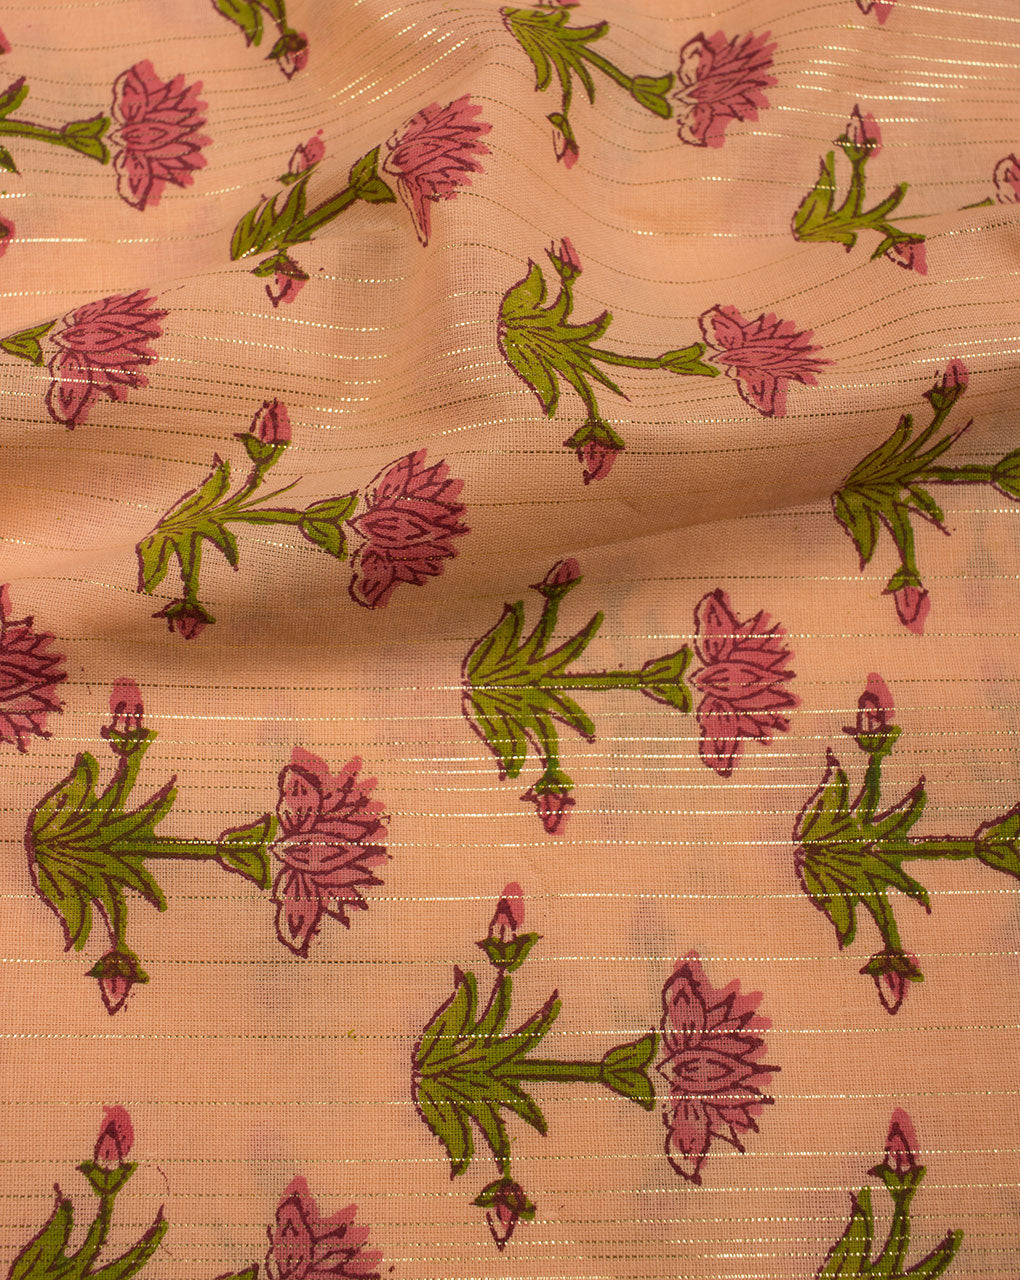 Screen Print Lurex Cotton Fabric - Fabriclore.com